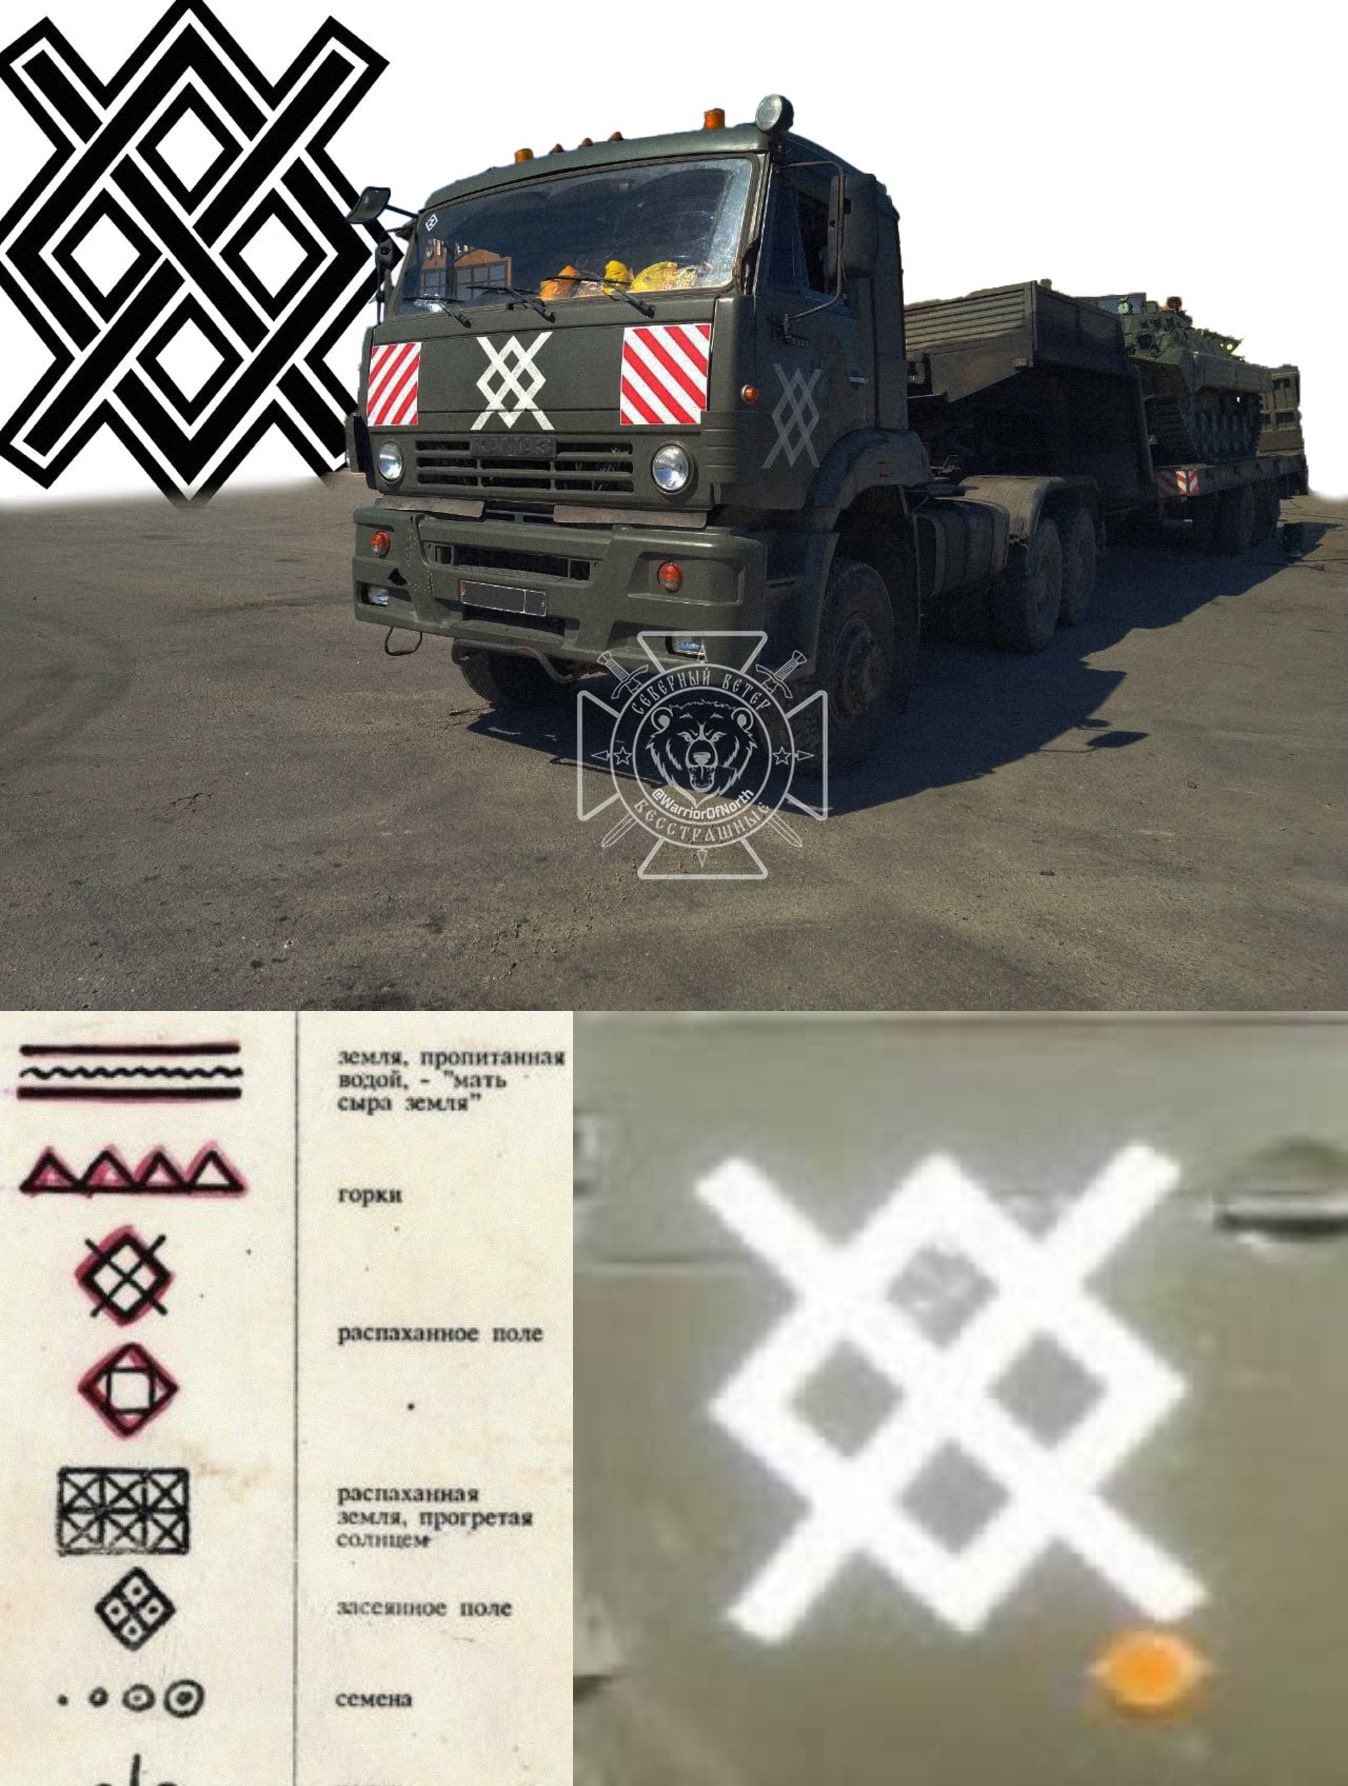 New Russian Military Symbol